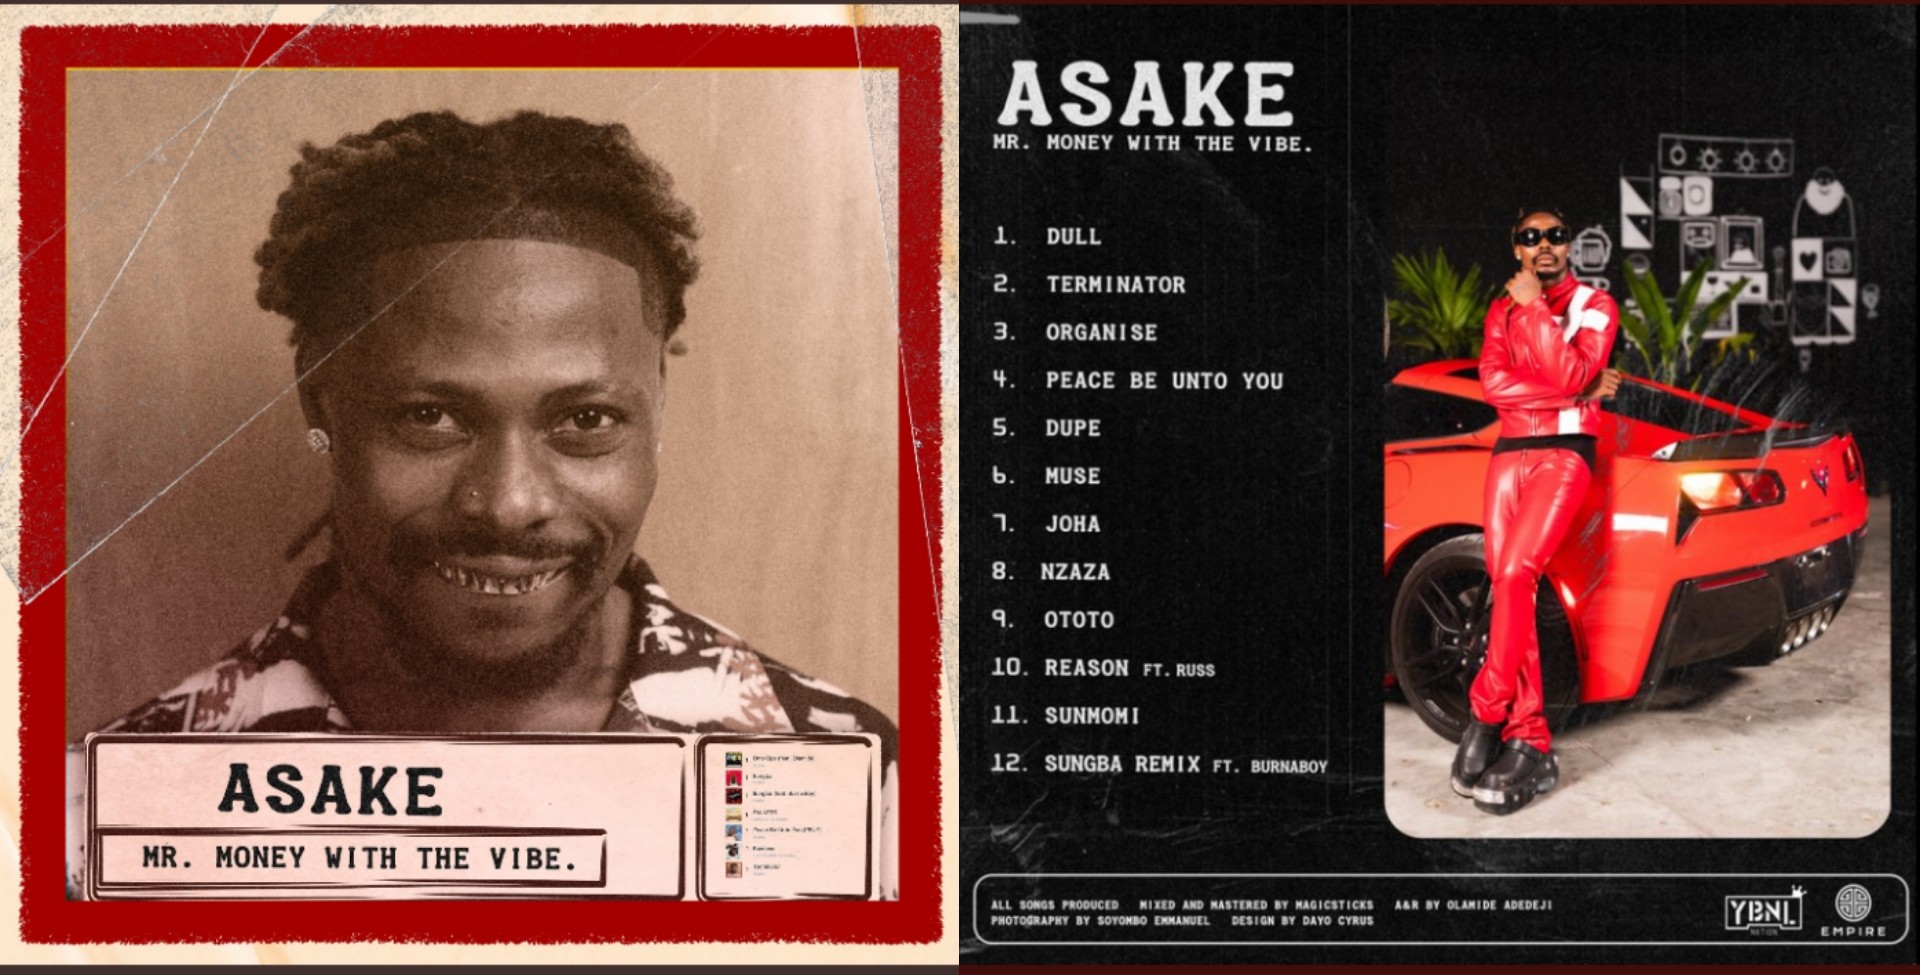 Asake’s Debut Album Debuts at Number 66 on the Billboard 200